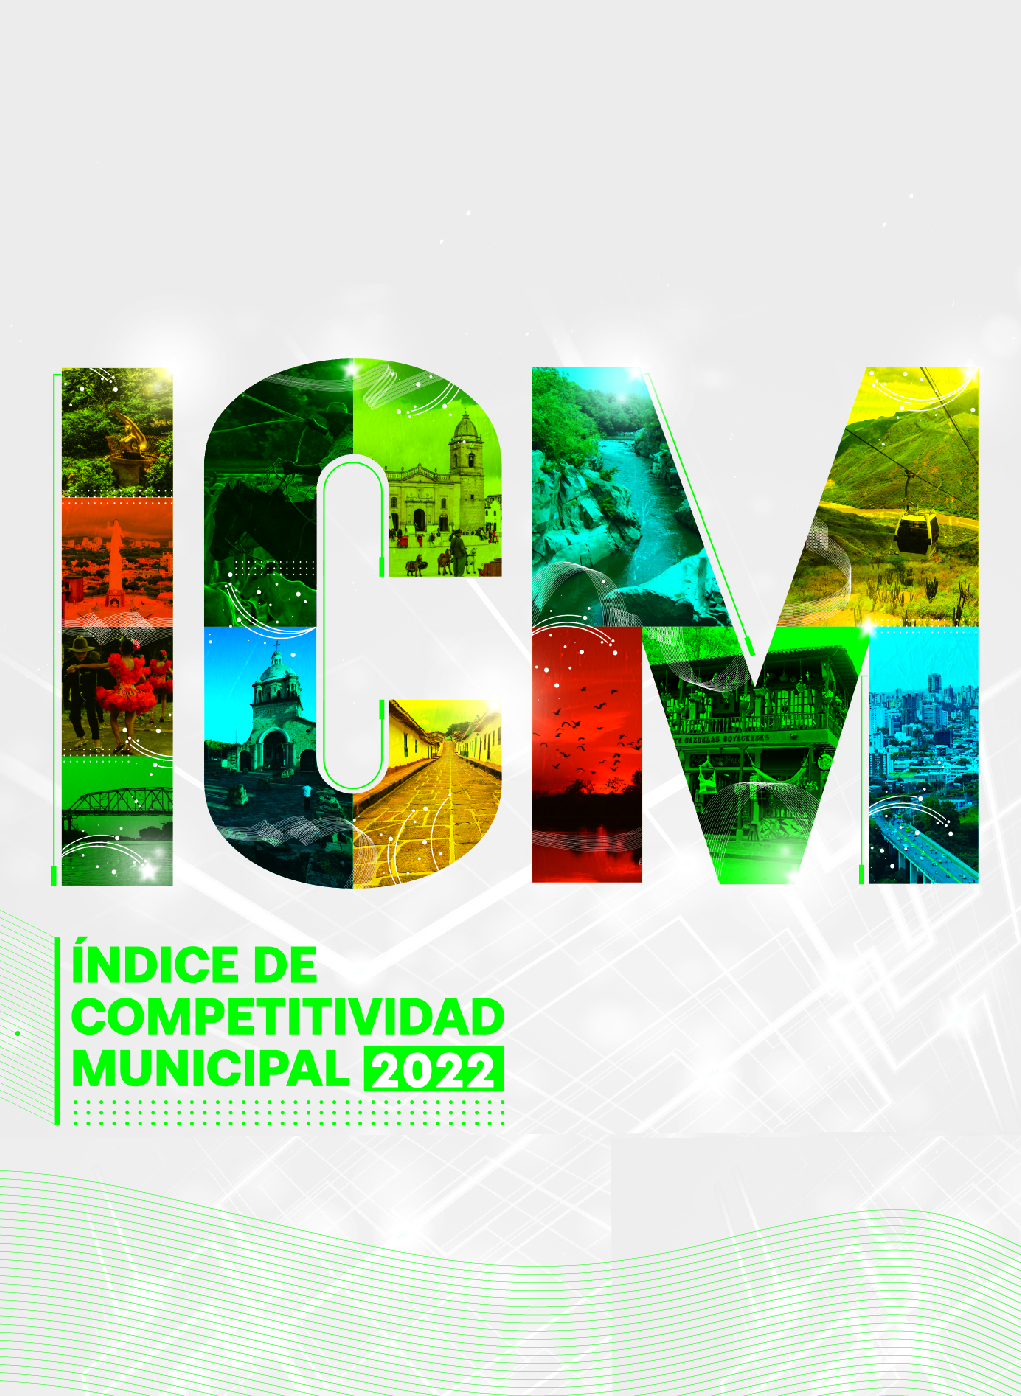 Ã�ndice de Competitividad Municipal (ICM) 2022